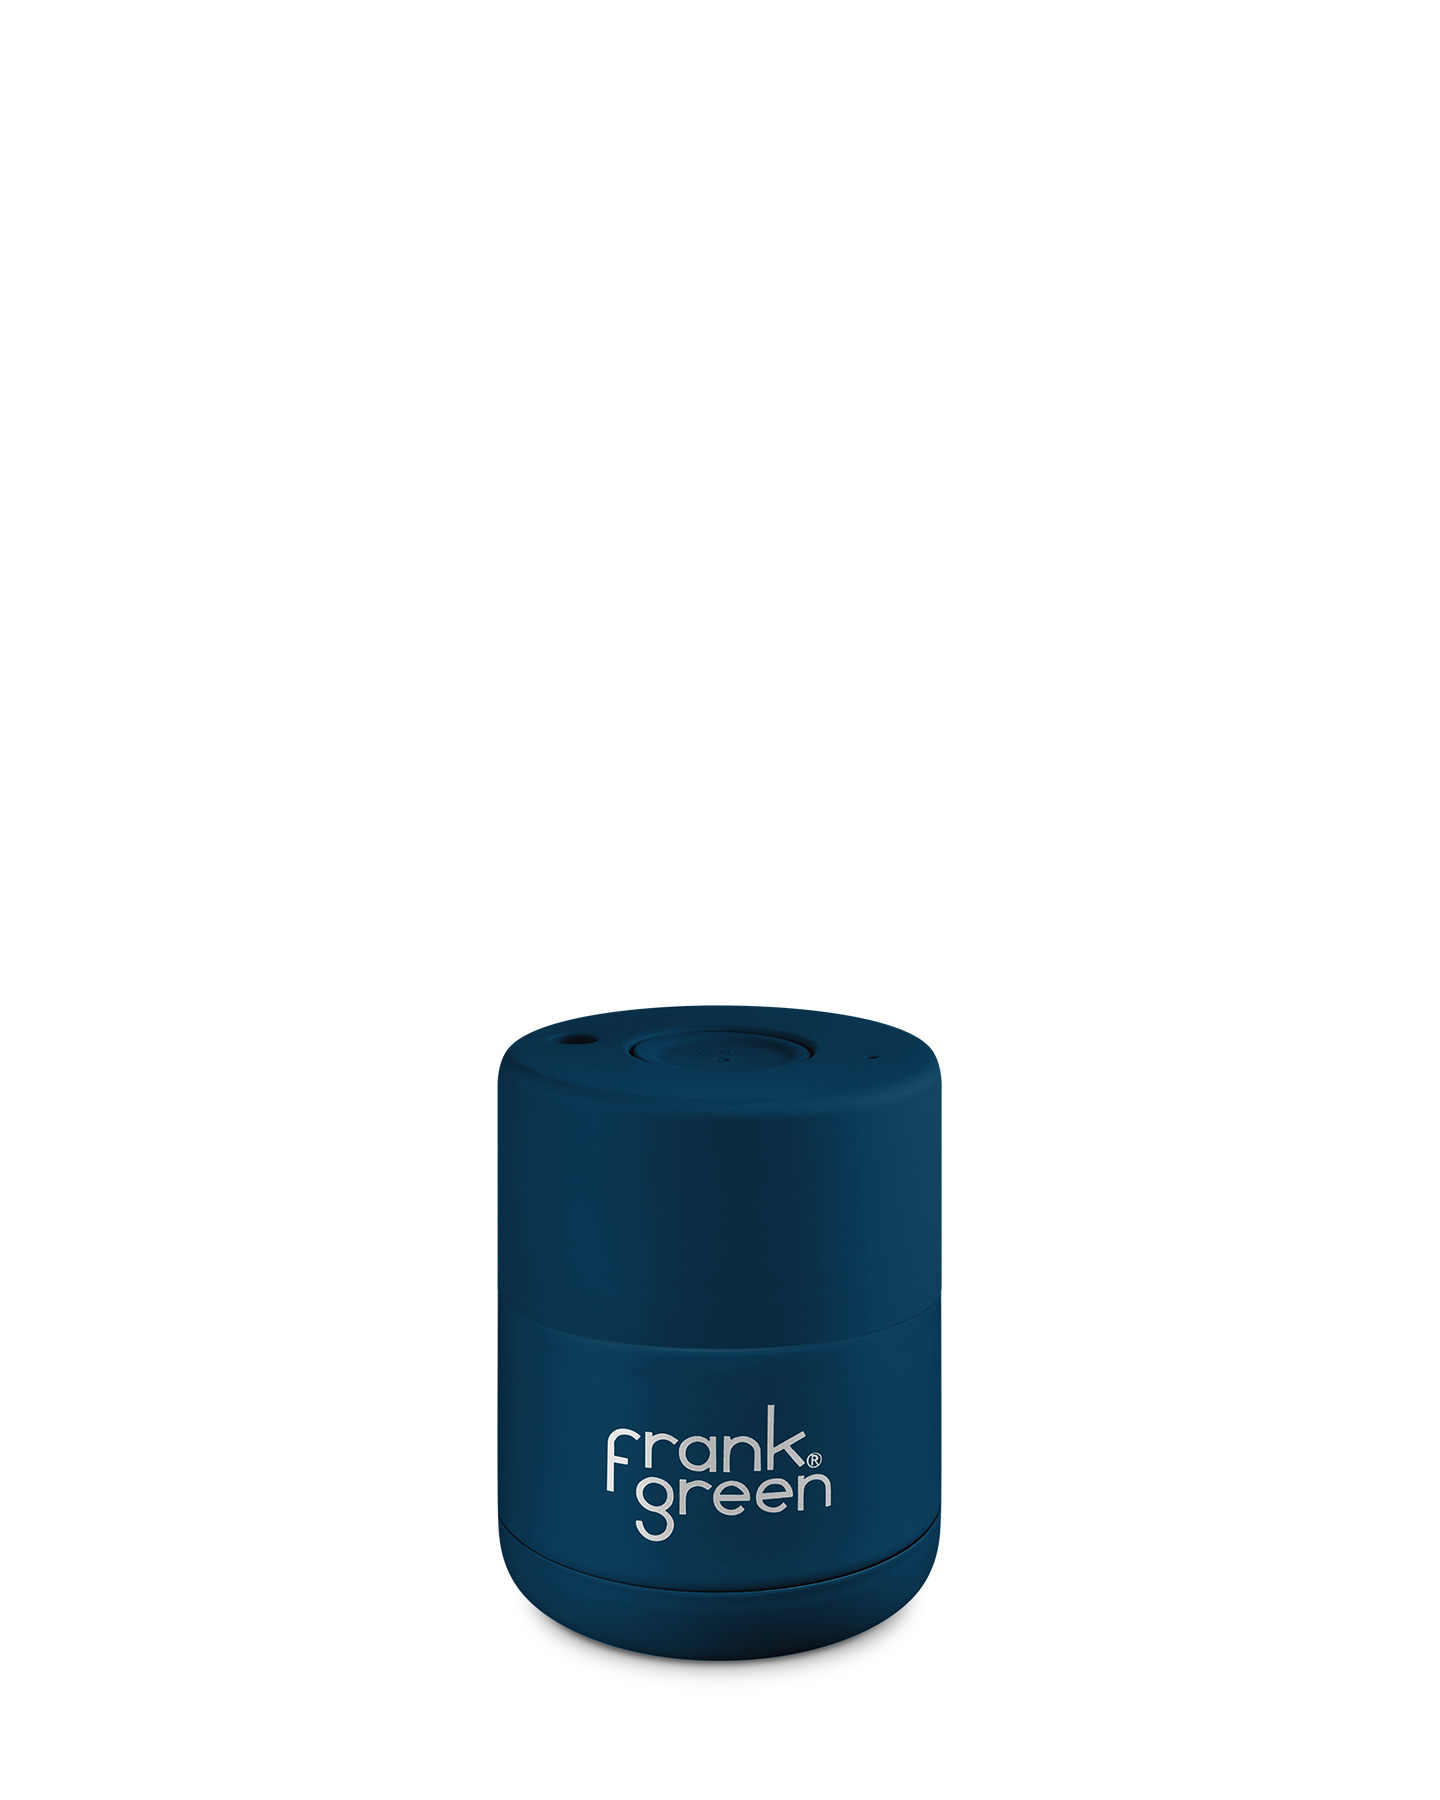 Frank Green Ceramic Reusable Cup - Small (6oz/175mL)